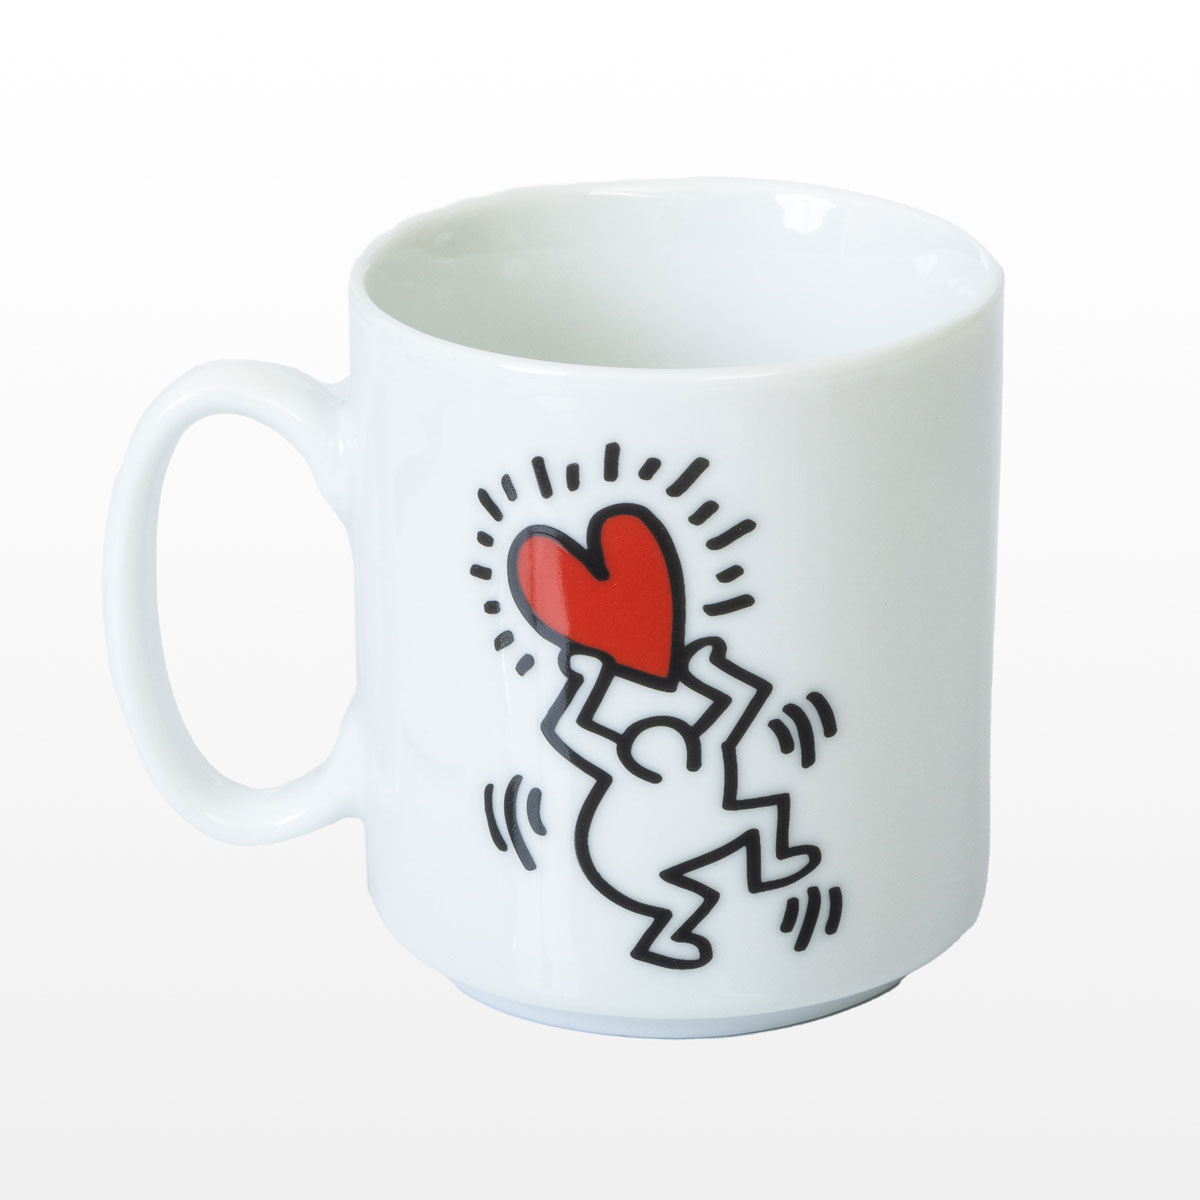 Keith Haring mug : Heart & Dancers (detail n°1)